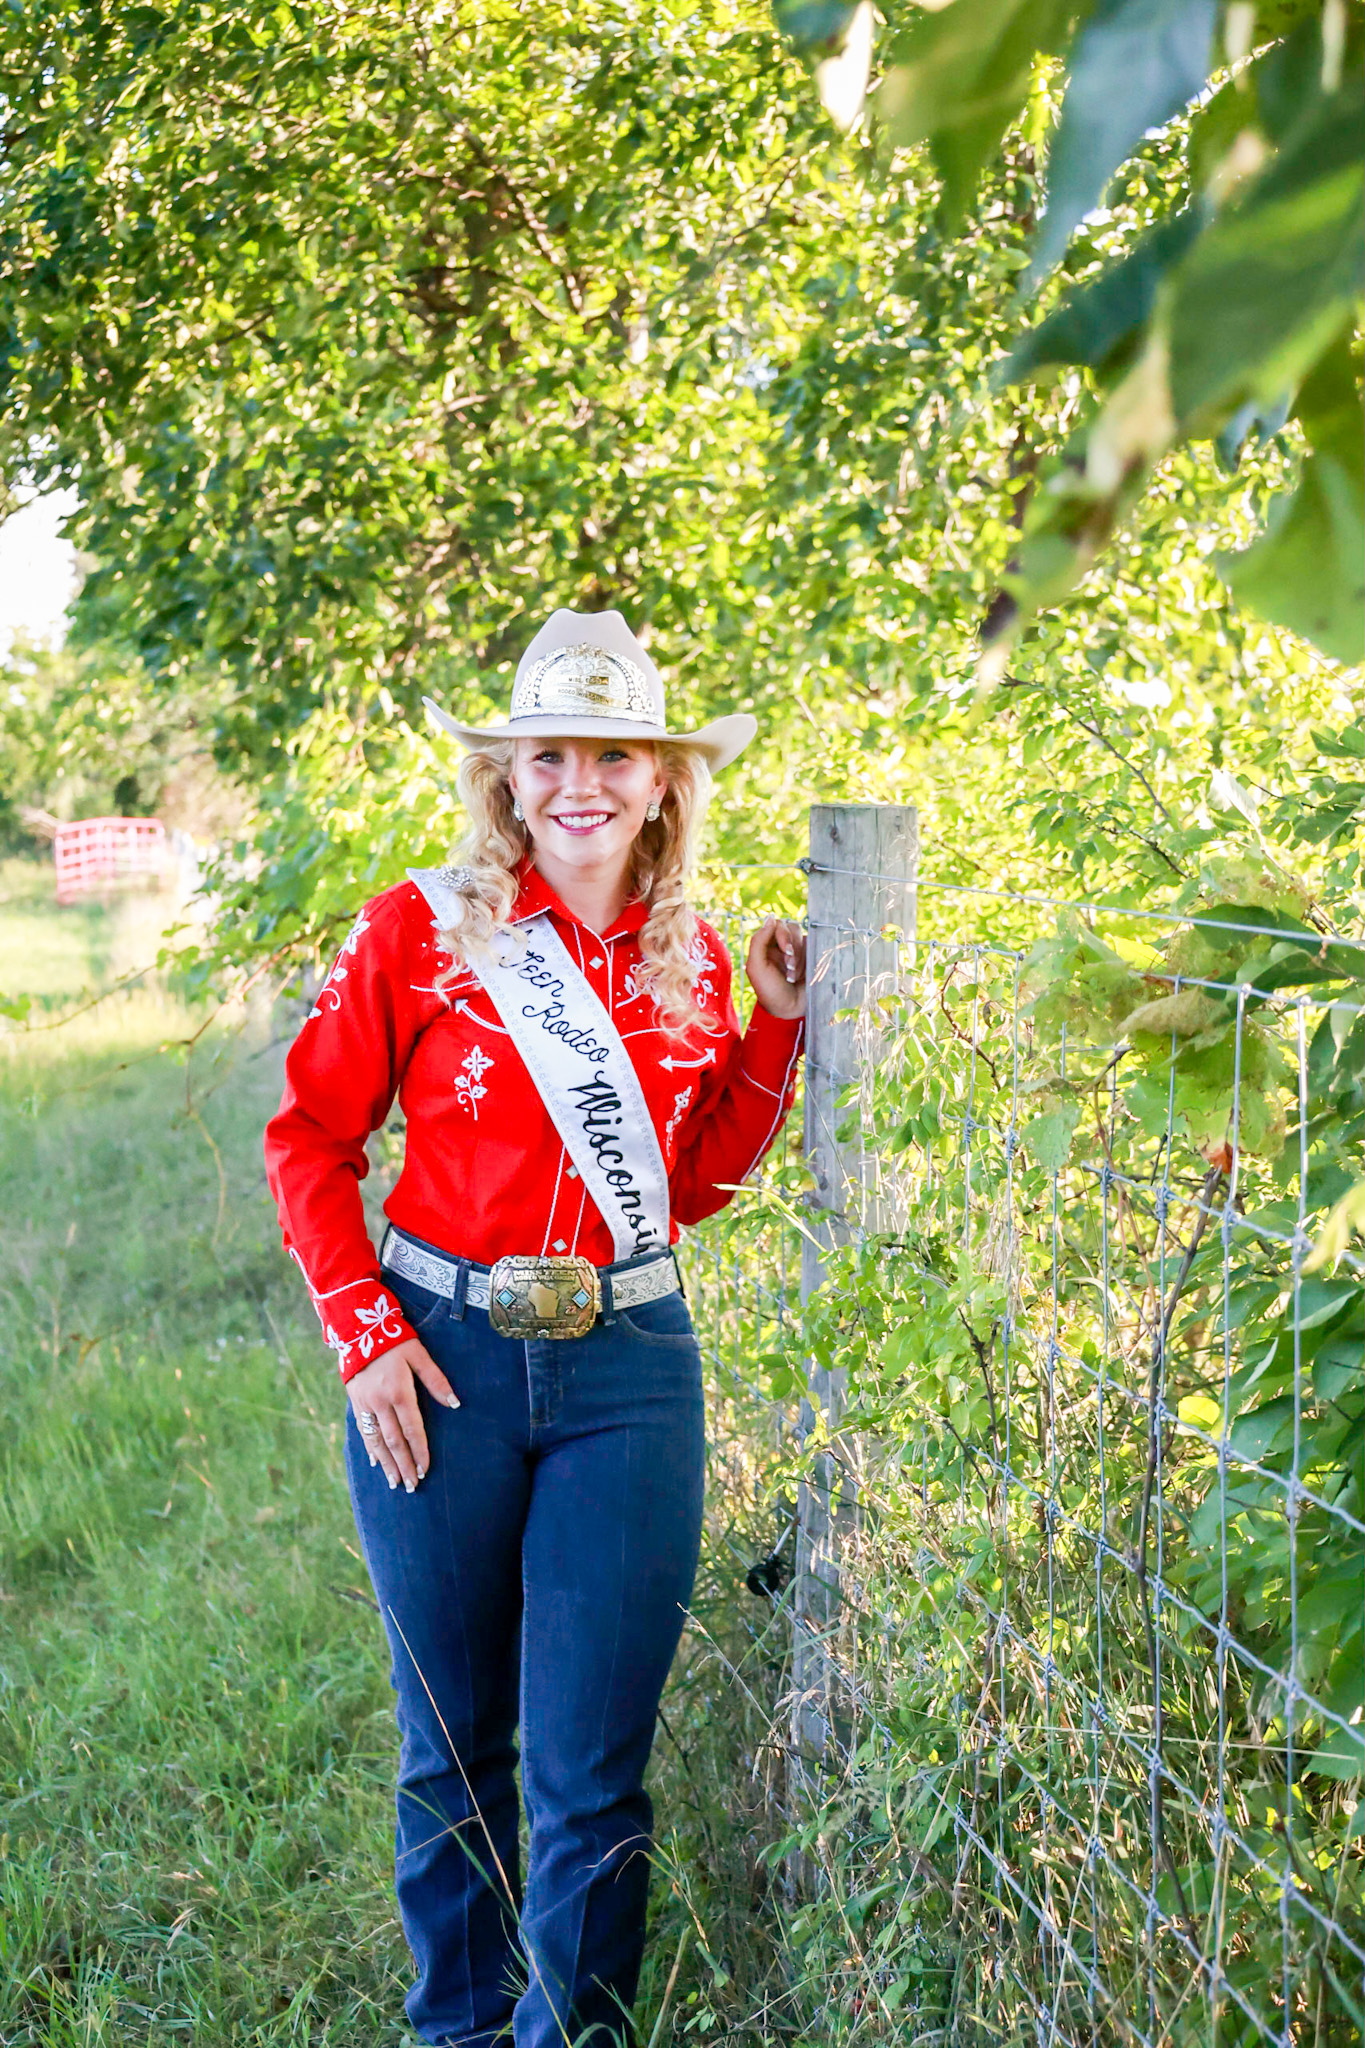 Weyauwega native Ashley Johnson named Miss Teen Rodeo of Wisconsin